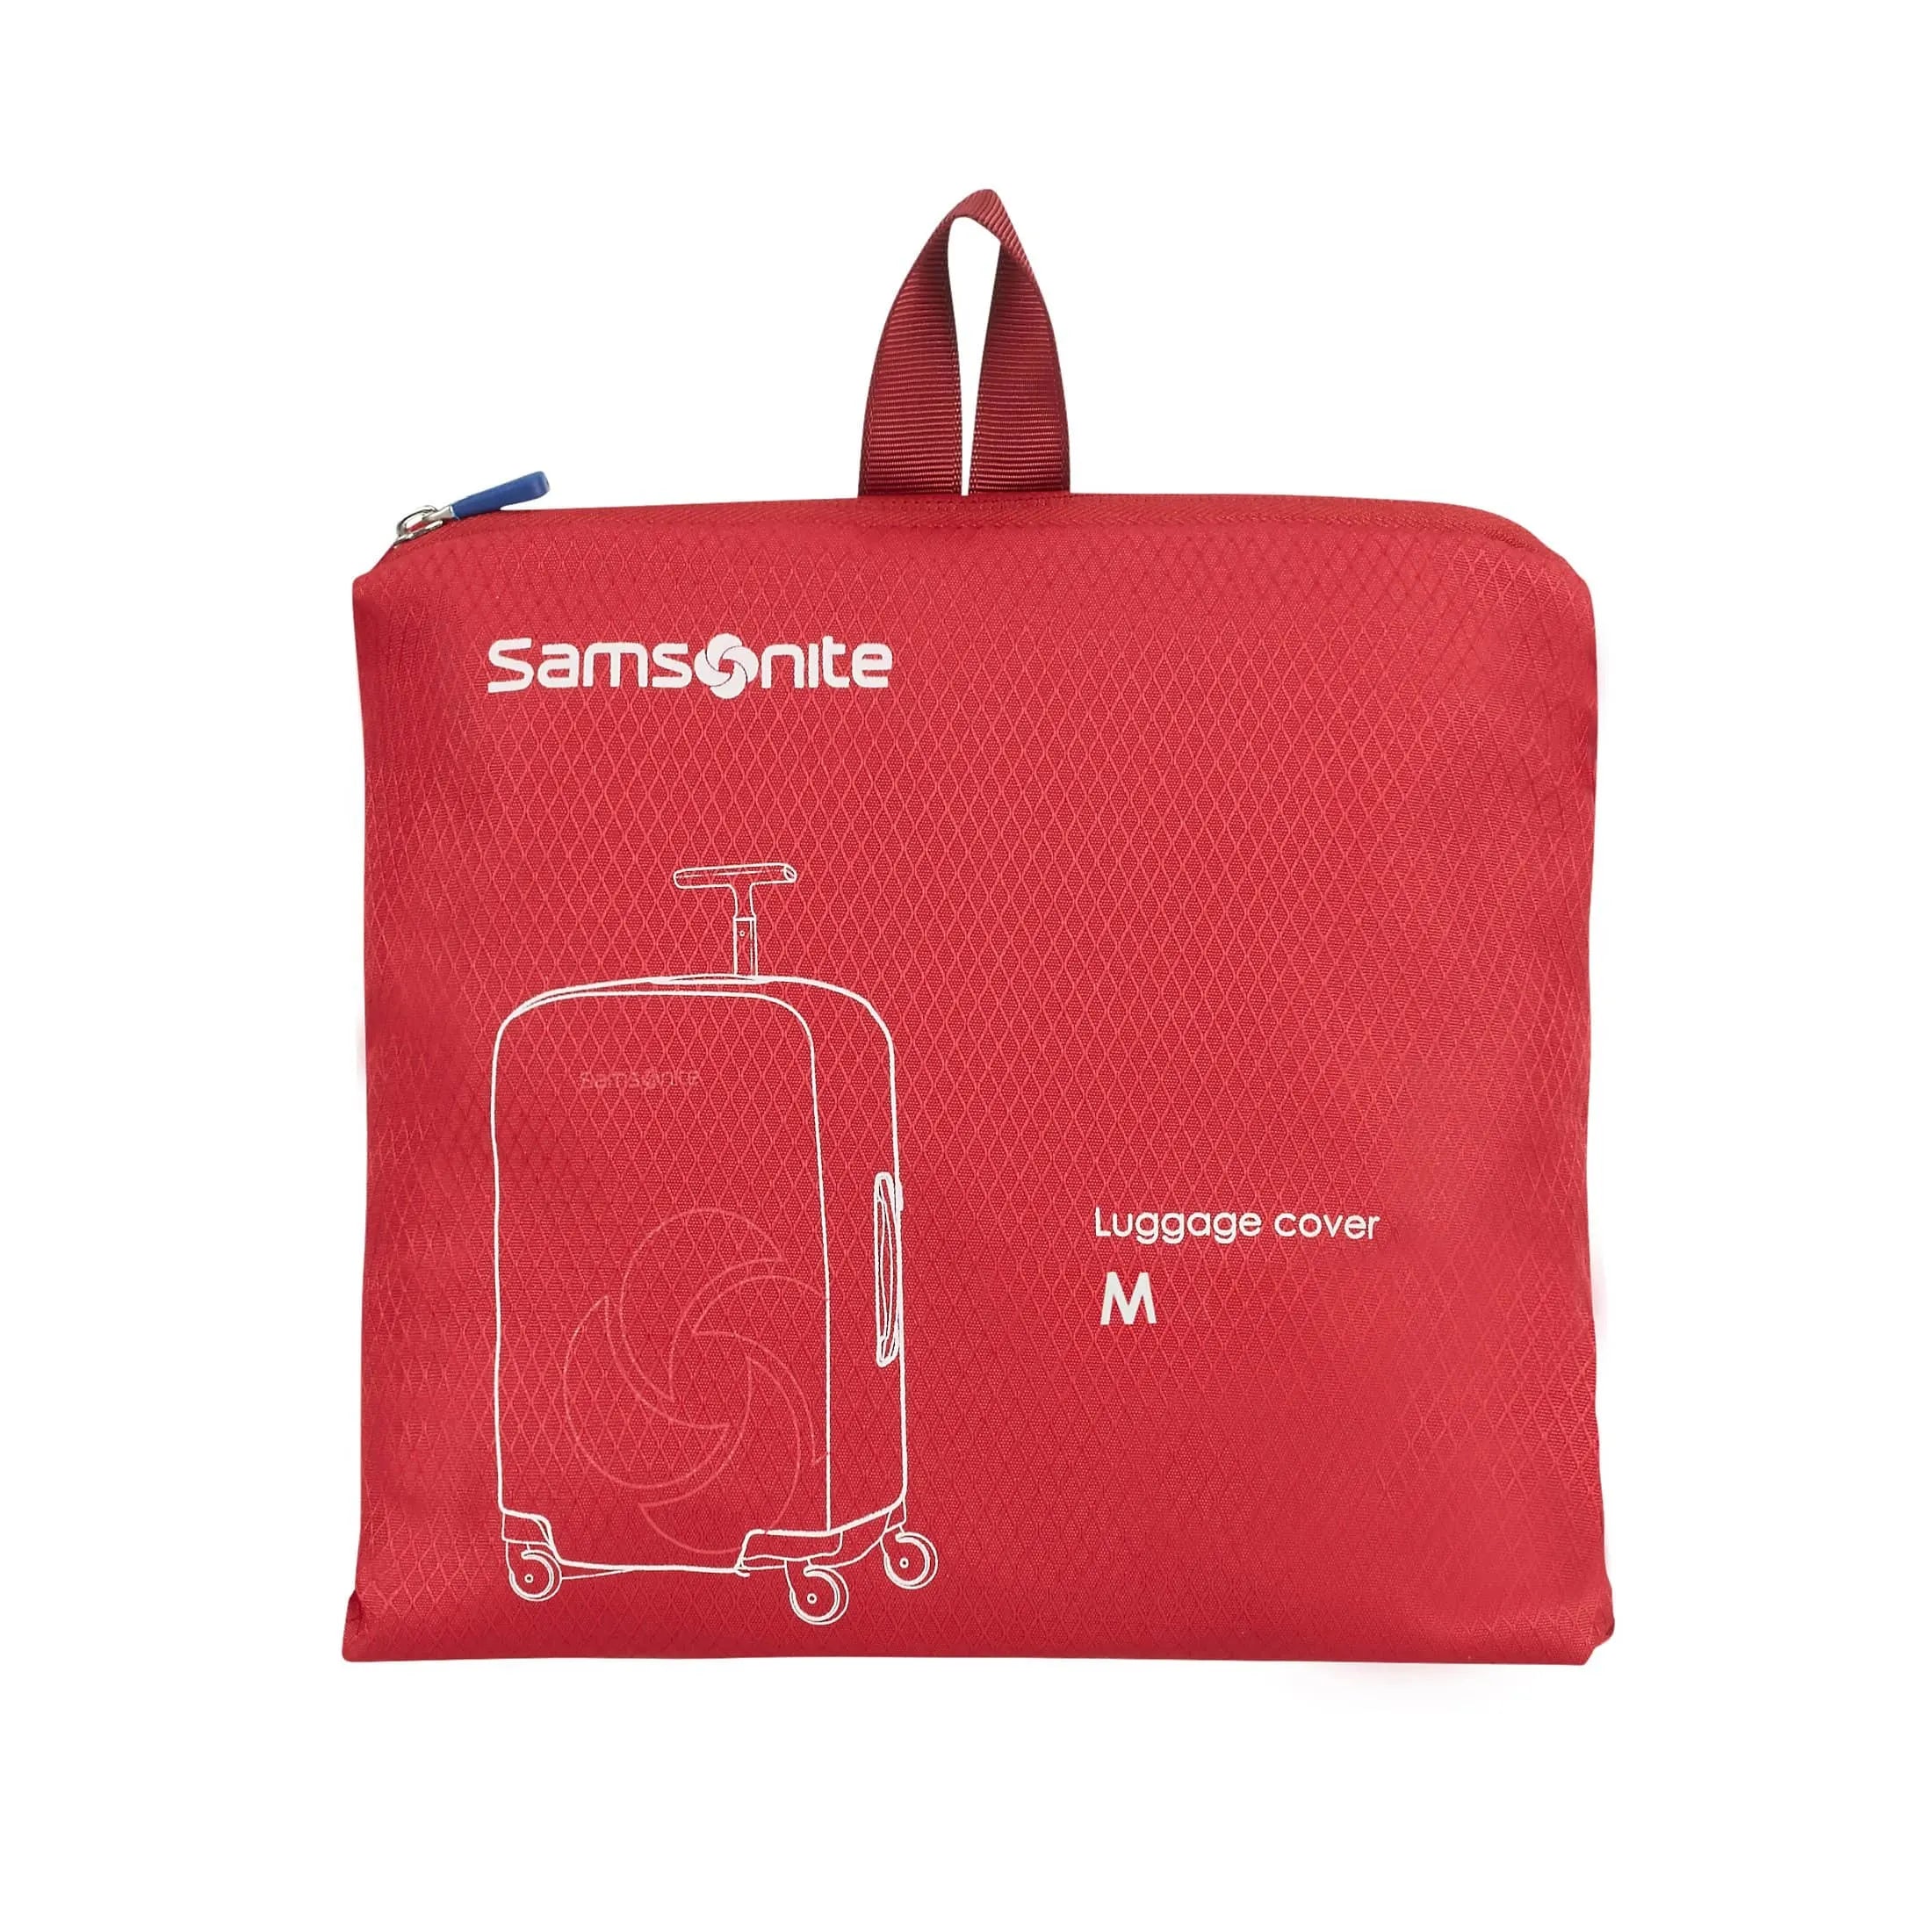 Samsonite Travel Accessories Kofferhülle M 69 cm - red